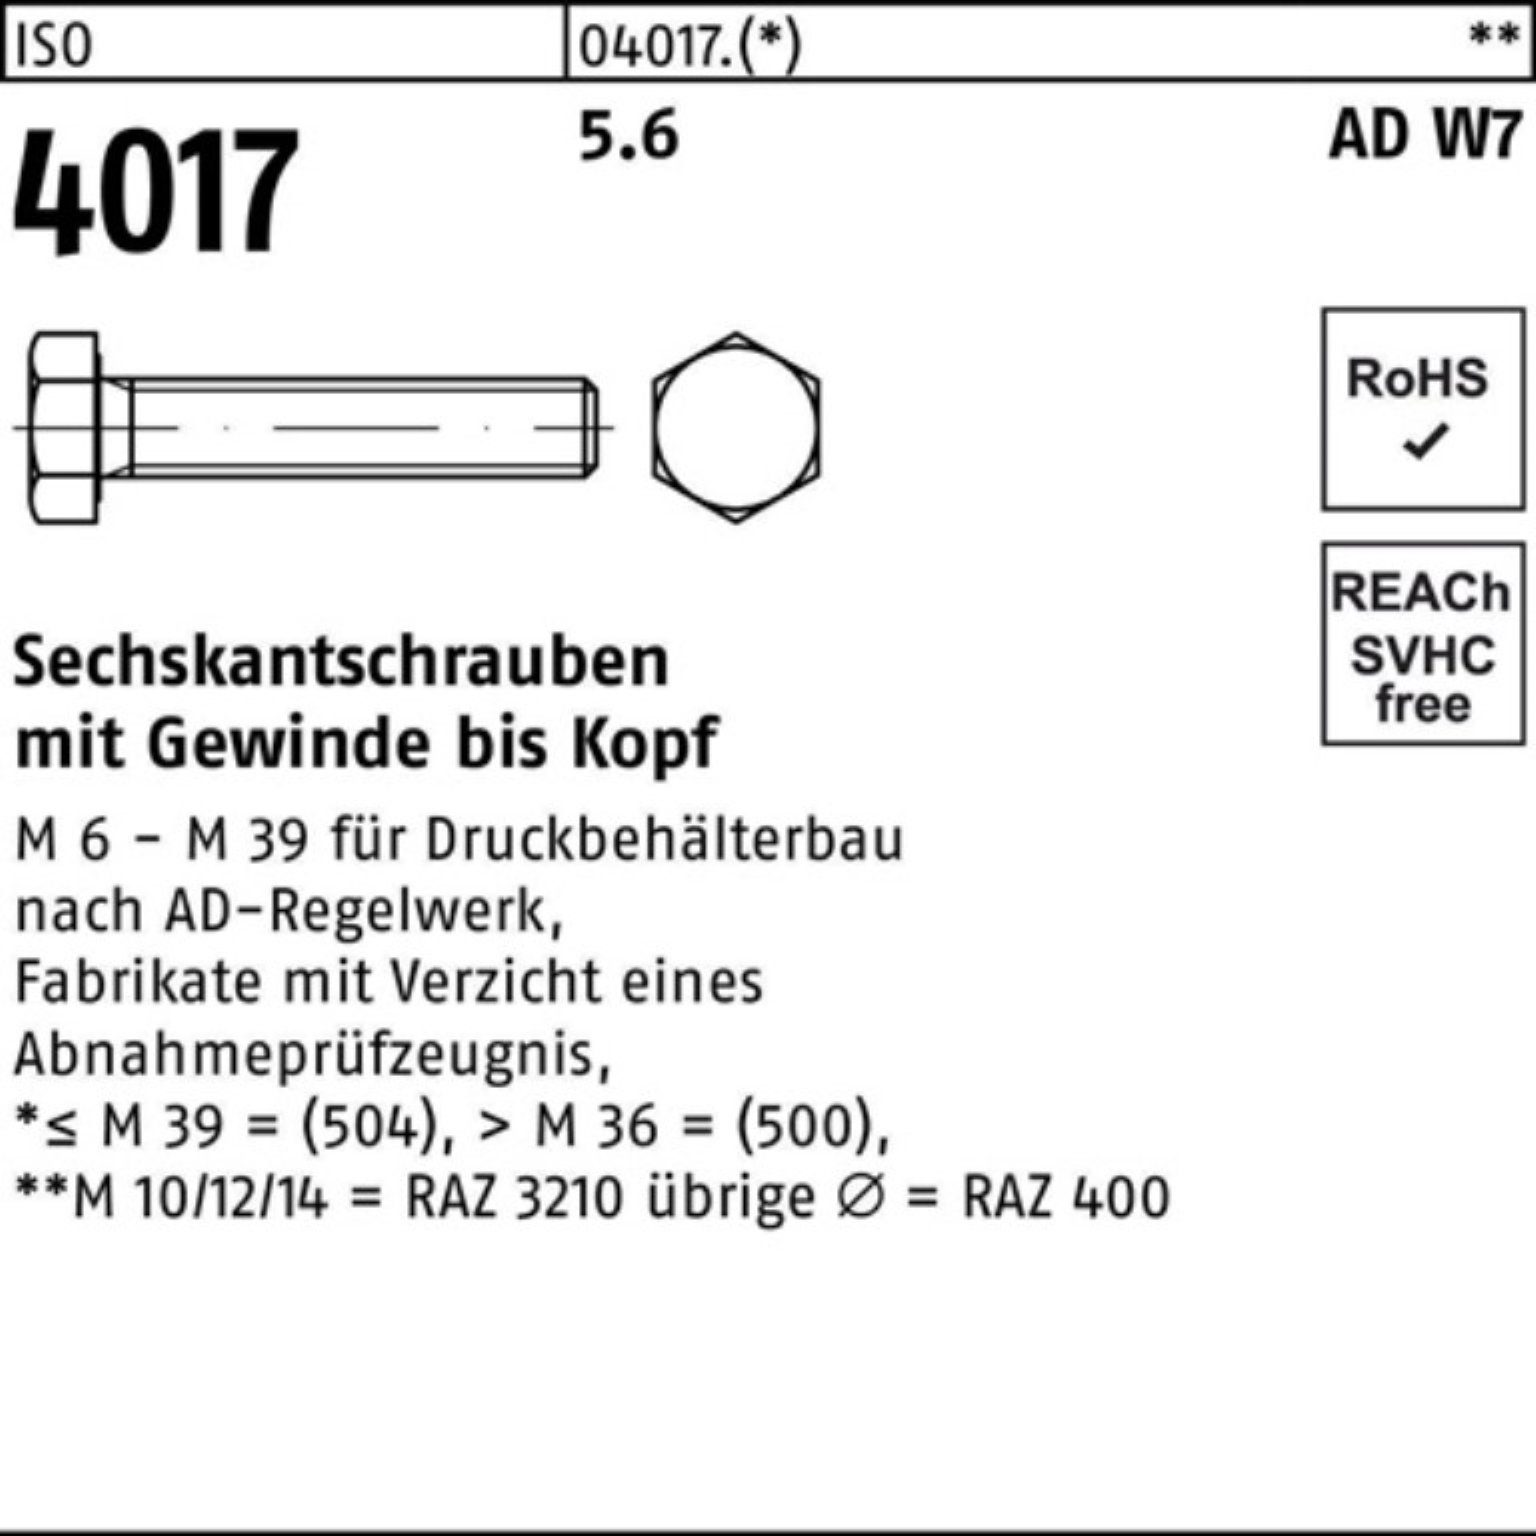 200 200er Sechskantschraube M8x Stück 5.6 W7 Pack Bufab 25 I Sechskantschraube ISO AD 4017 VG